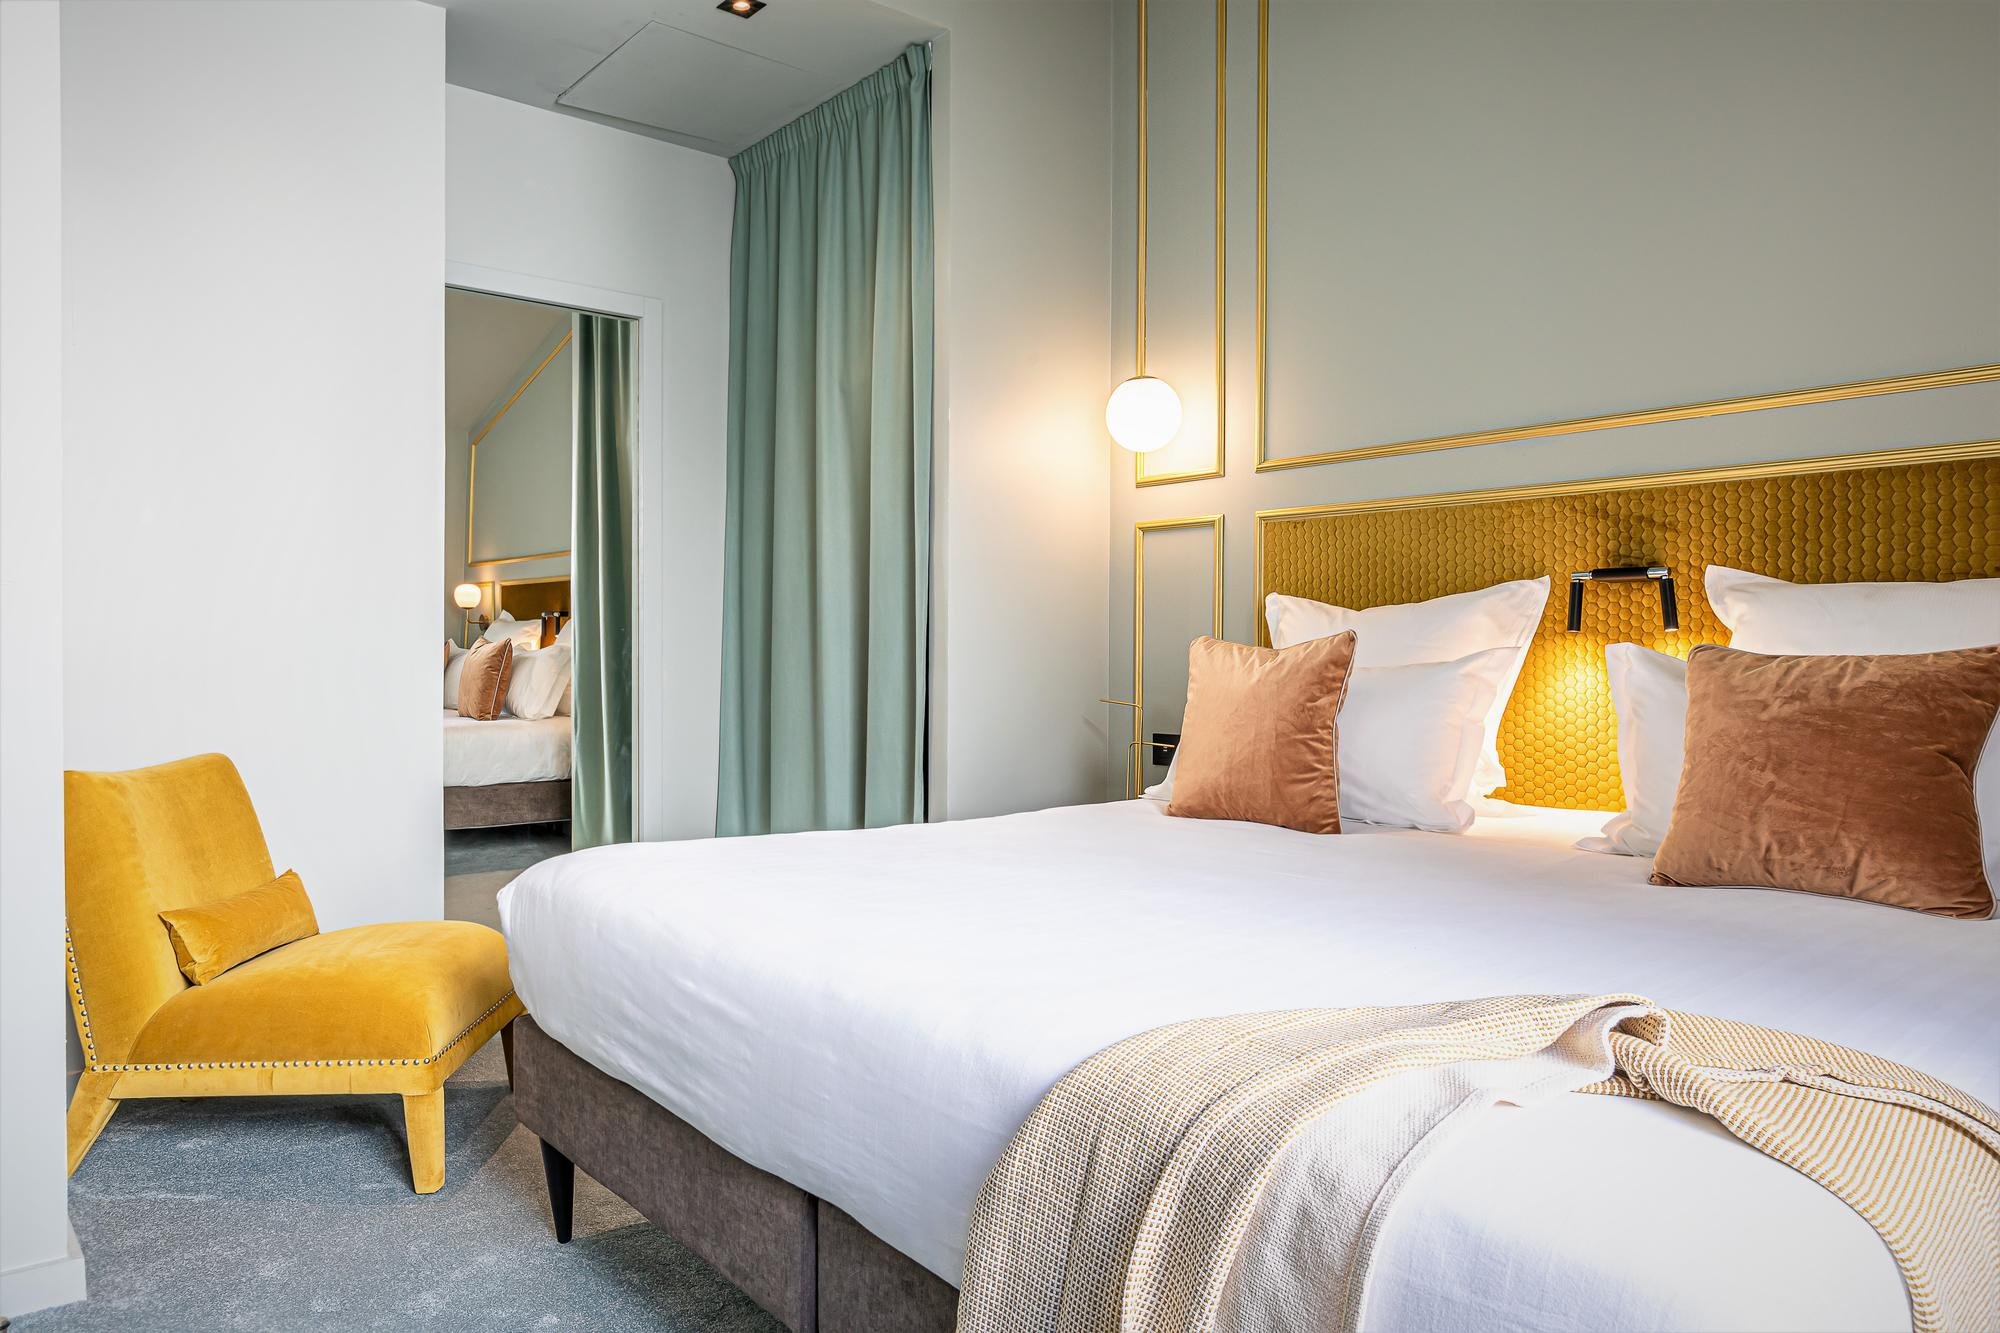 Hotel Veryste - Verystyle Room - Bed